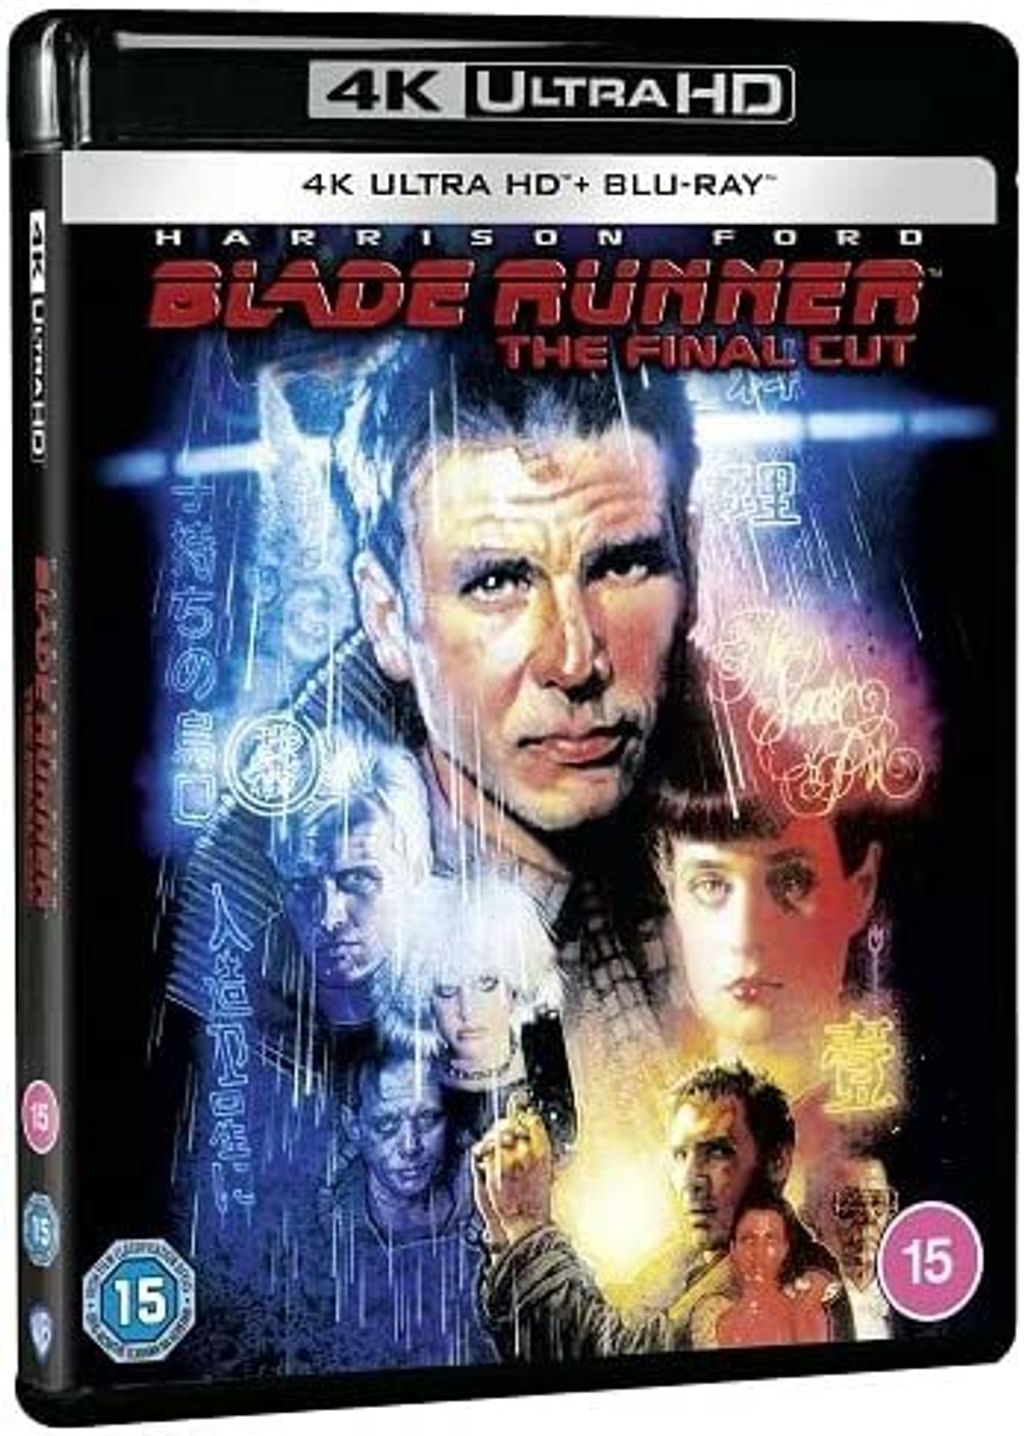 BLADE RUNNER The Final Cut 4K Ultra-HD Blu-ray 2-DISCS